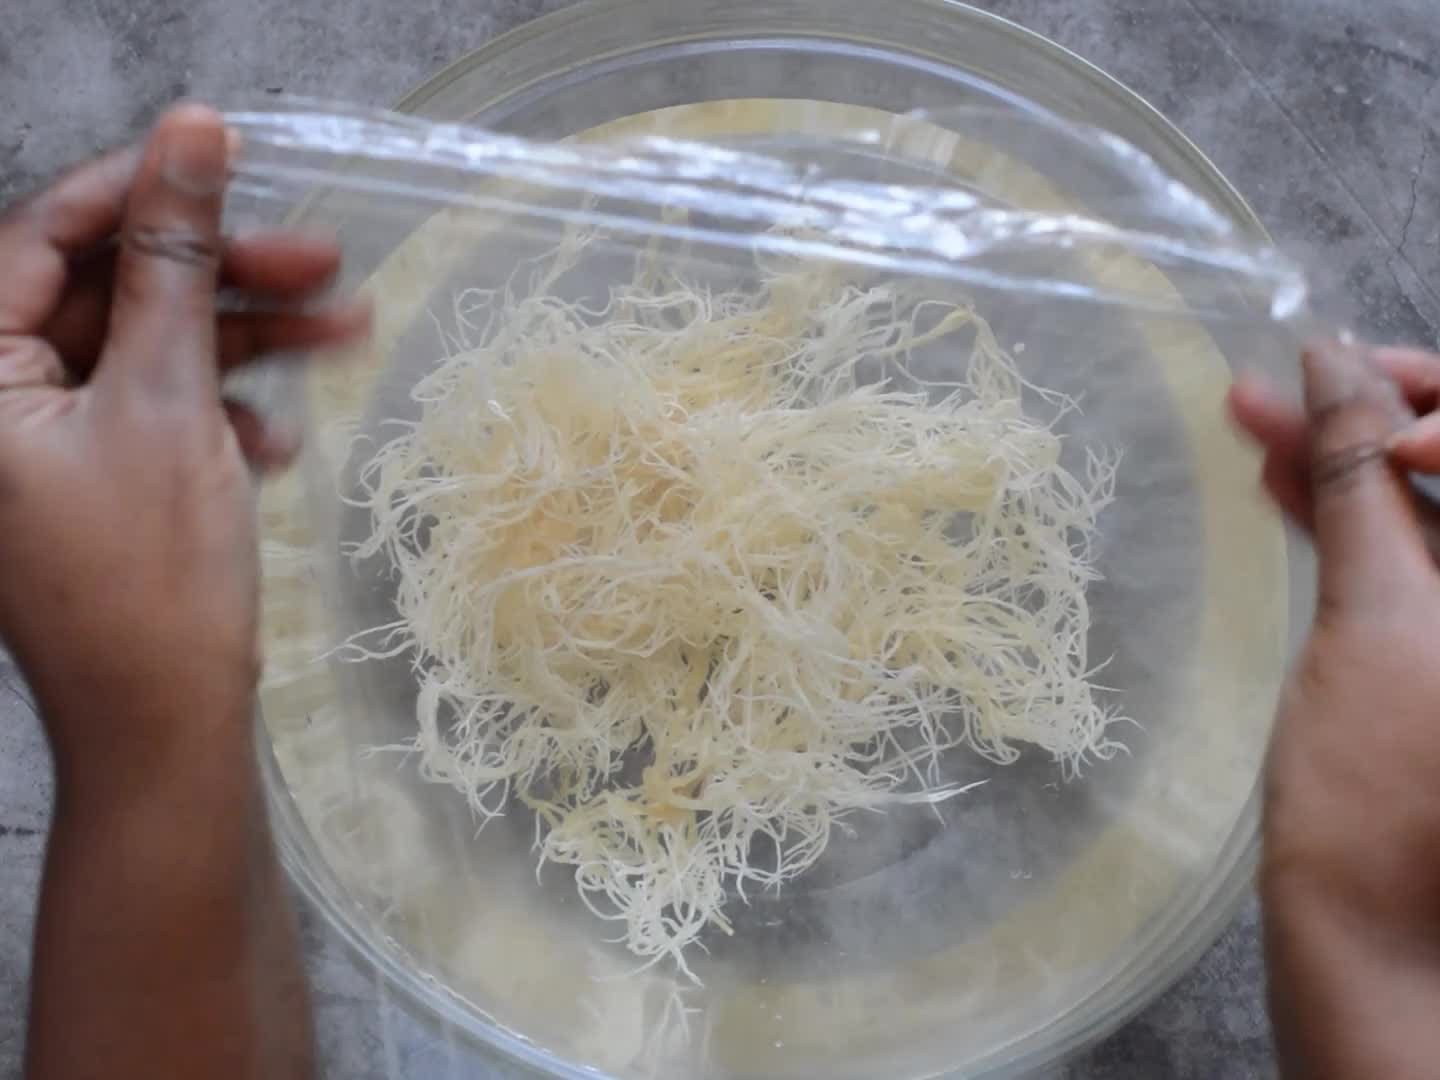 How to Make Sea Moss Gel